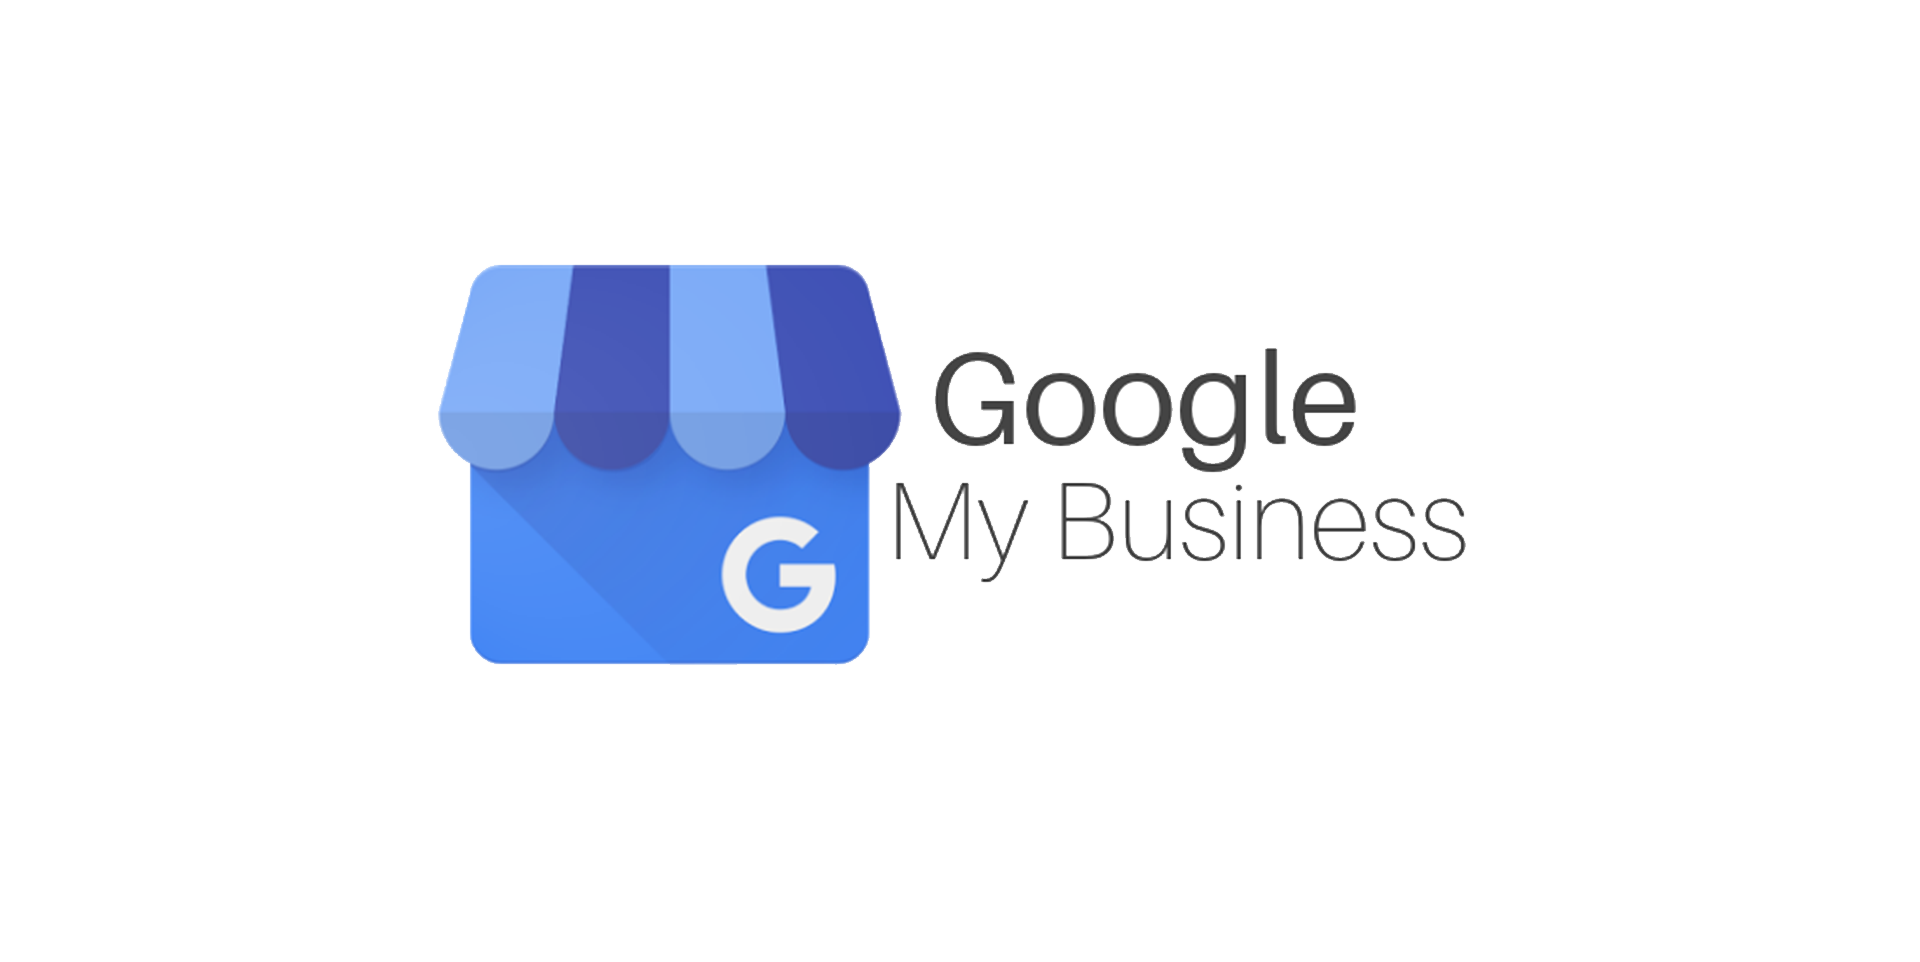 Google My Business Marketing Agency